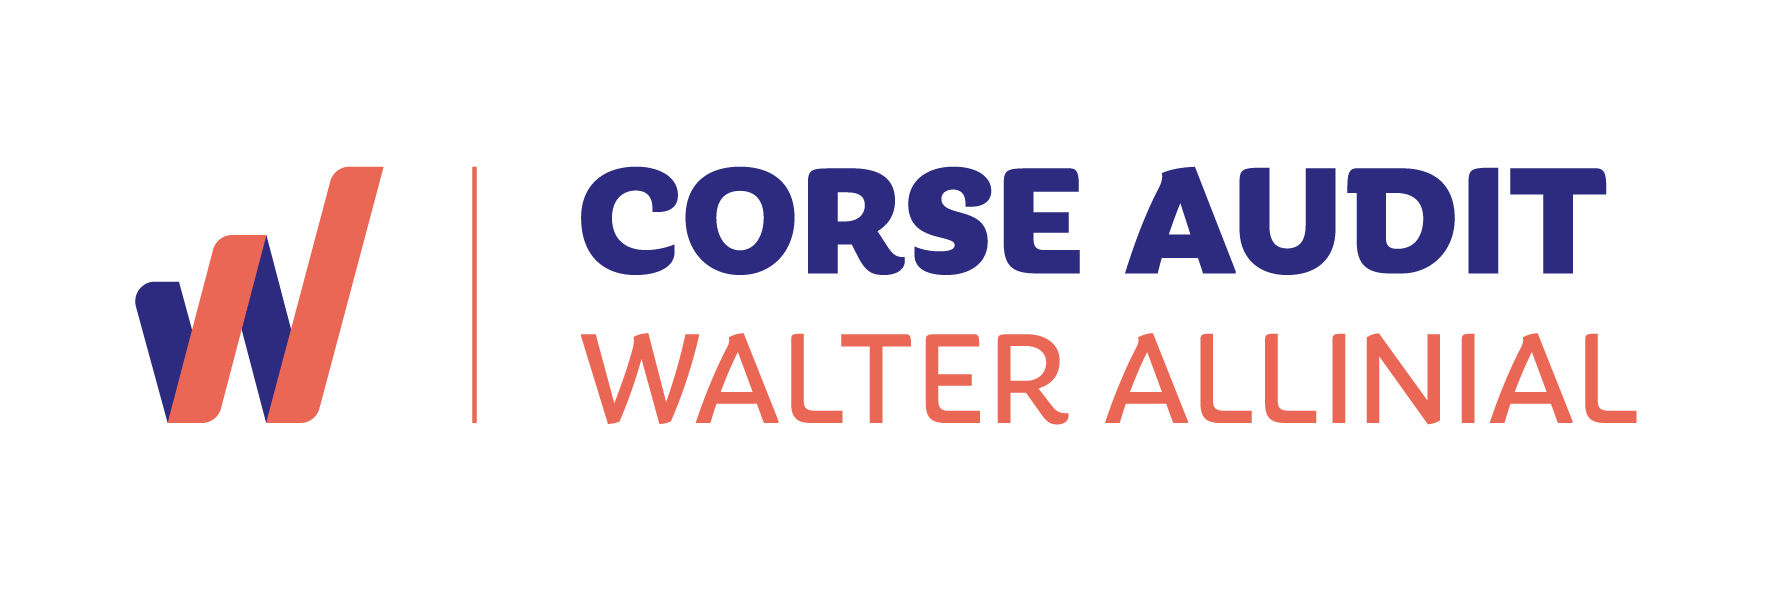 CORSE AUDIT Walter Allinial_seul_quadri